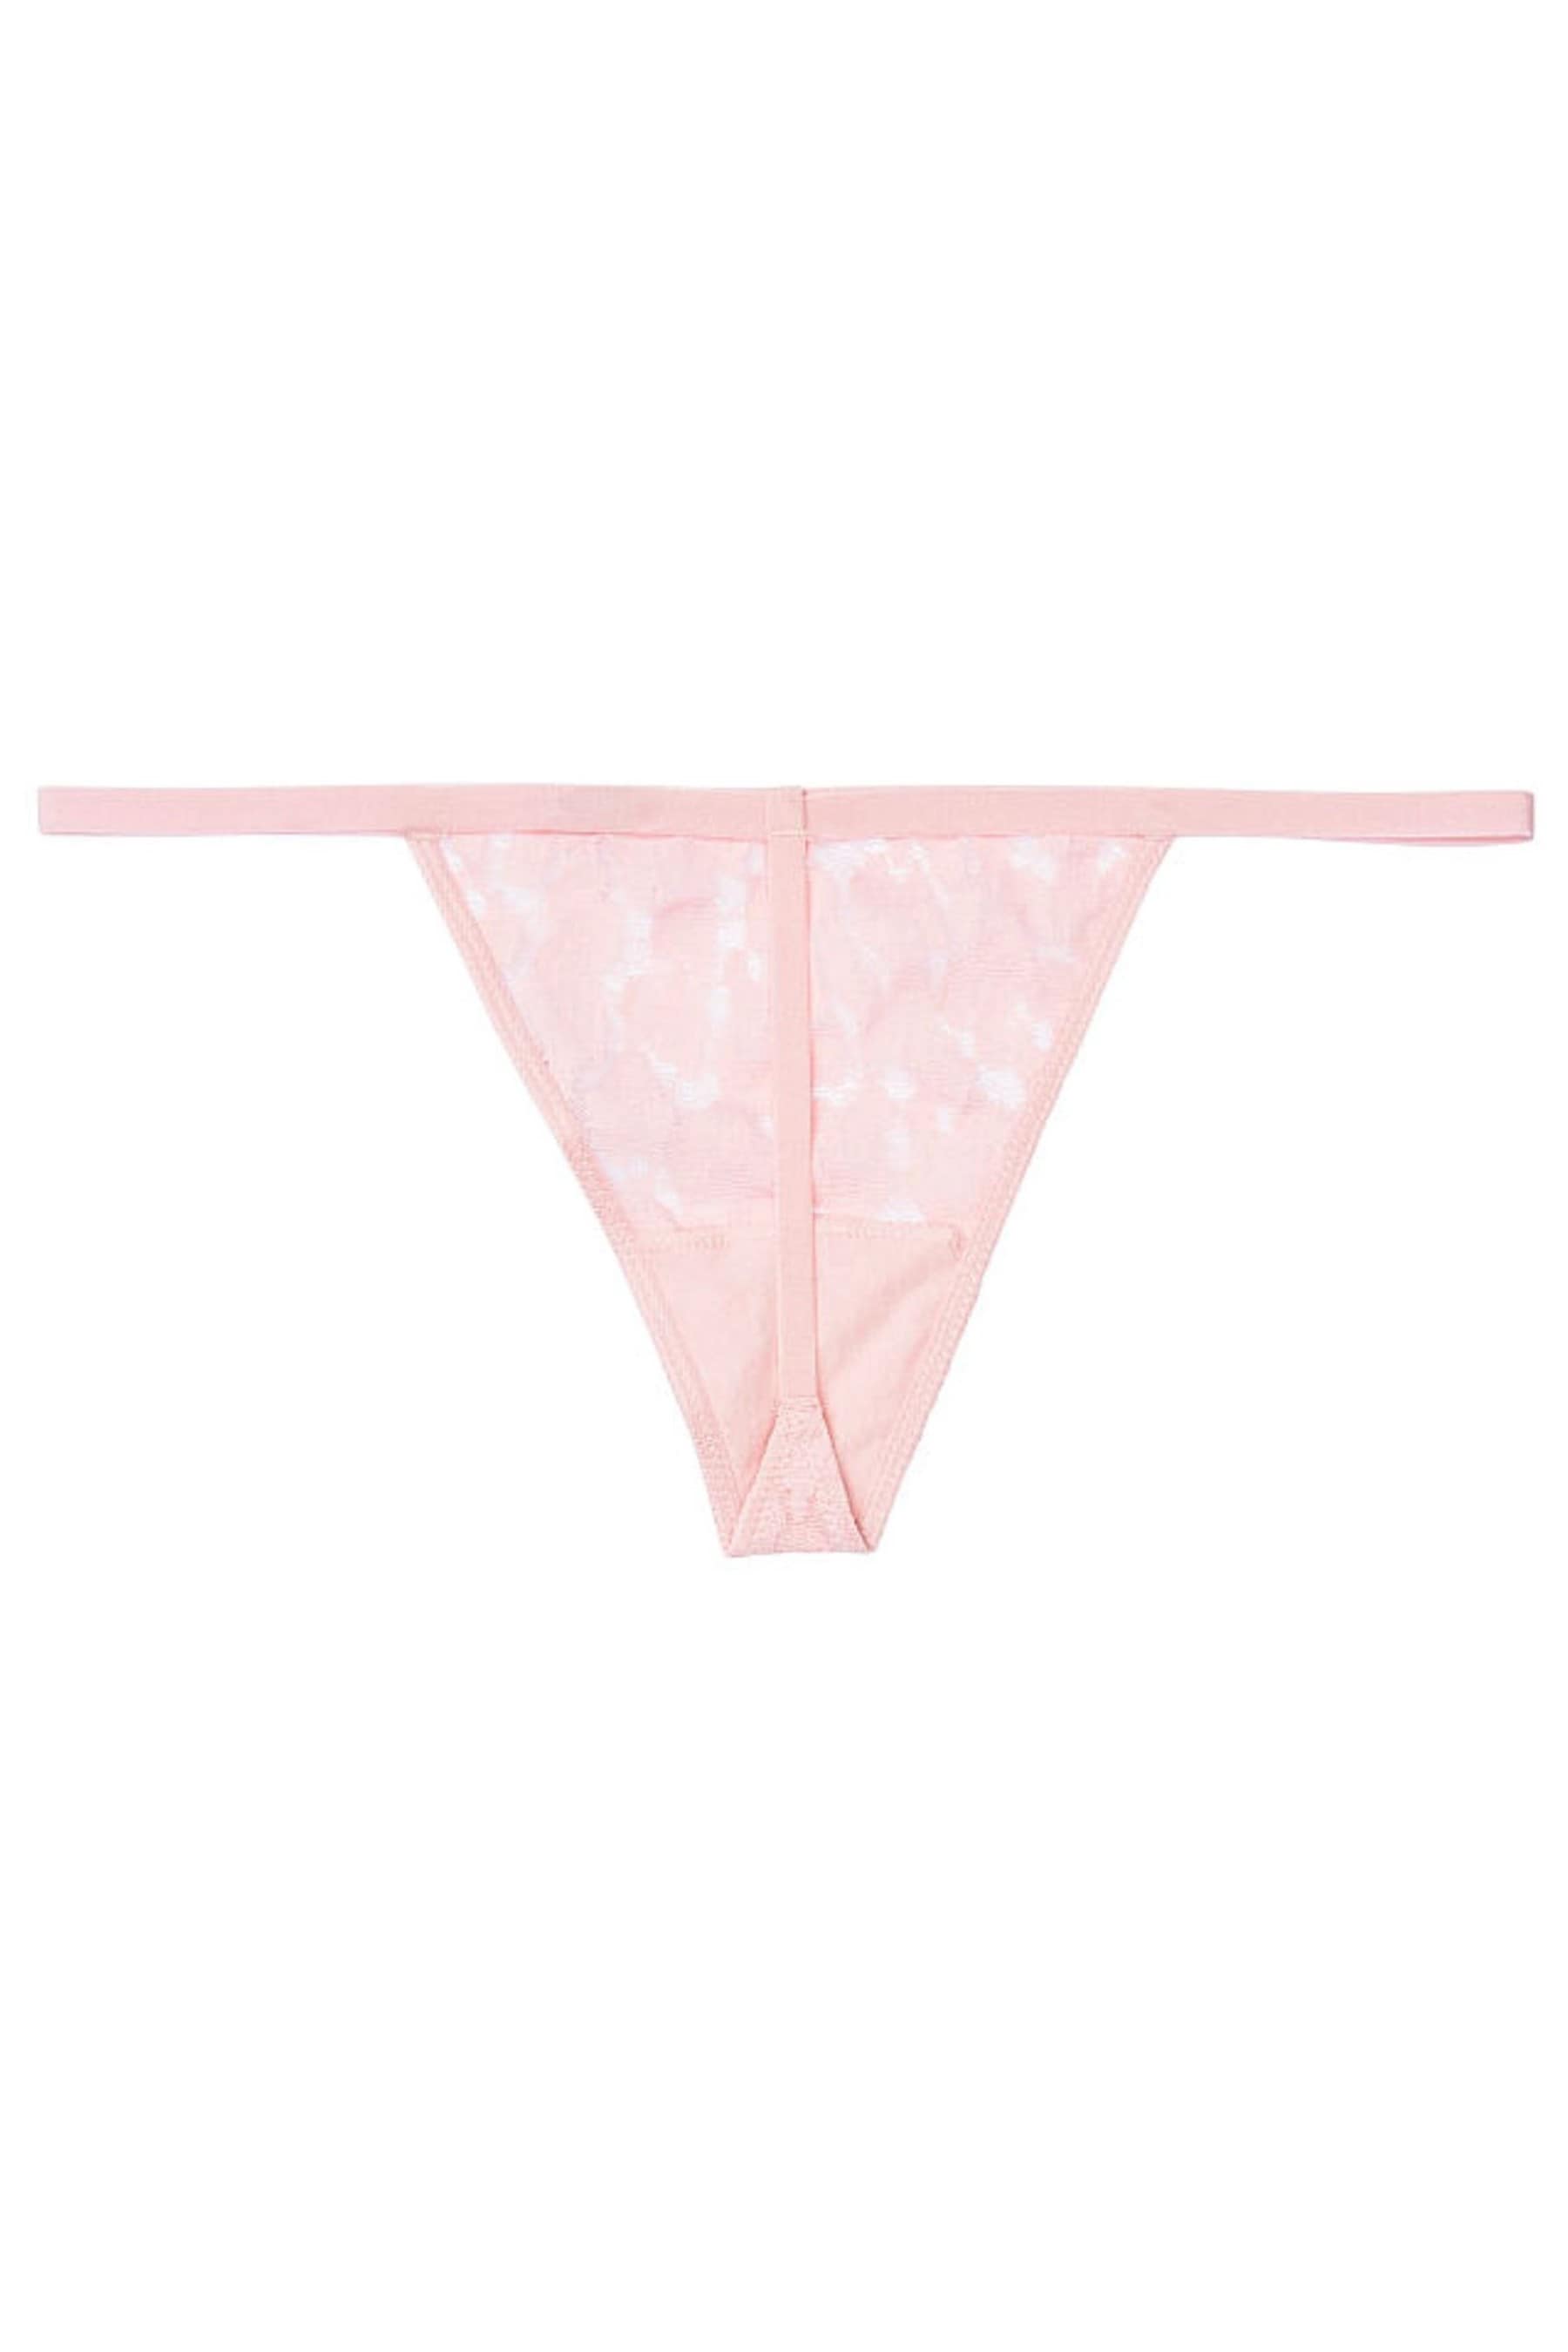 Buy Victoria's Secret Lace V-String Panty from the Victoria's Secret UK ...